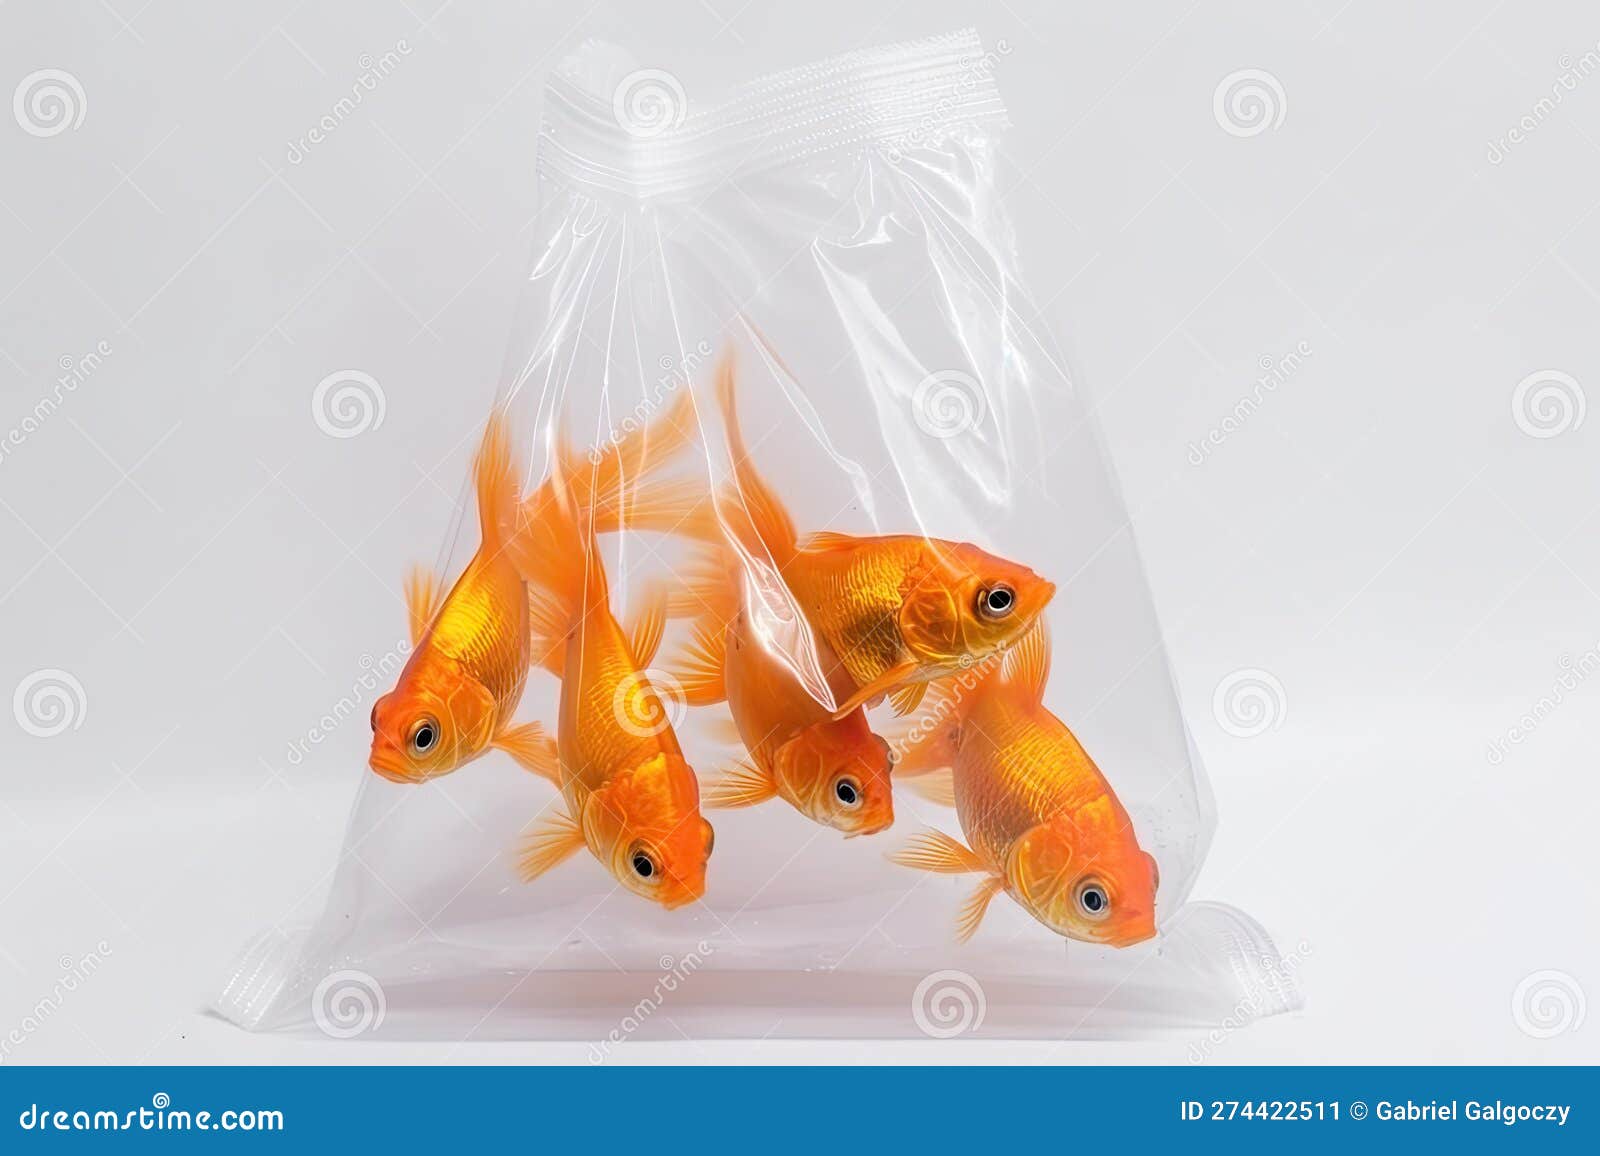 Several Goldfish in Plastic Bag Isolated on White Background Stock  Illustration - Illustration of plastic, underwater: 274422511